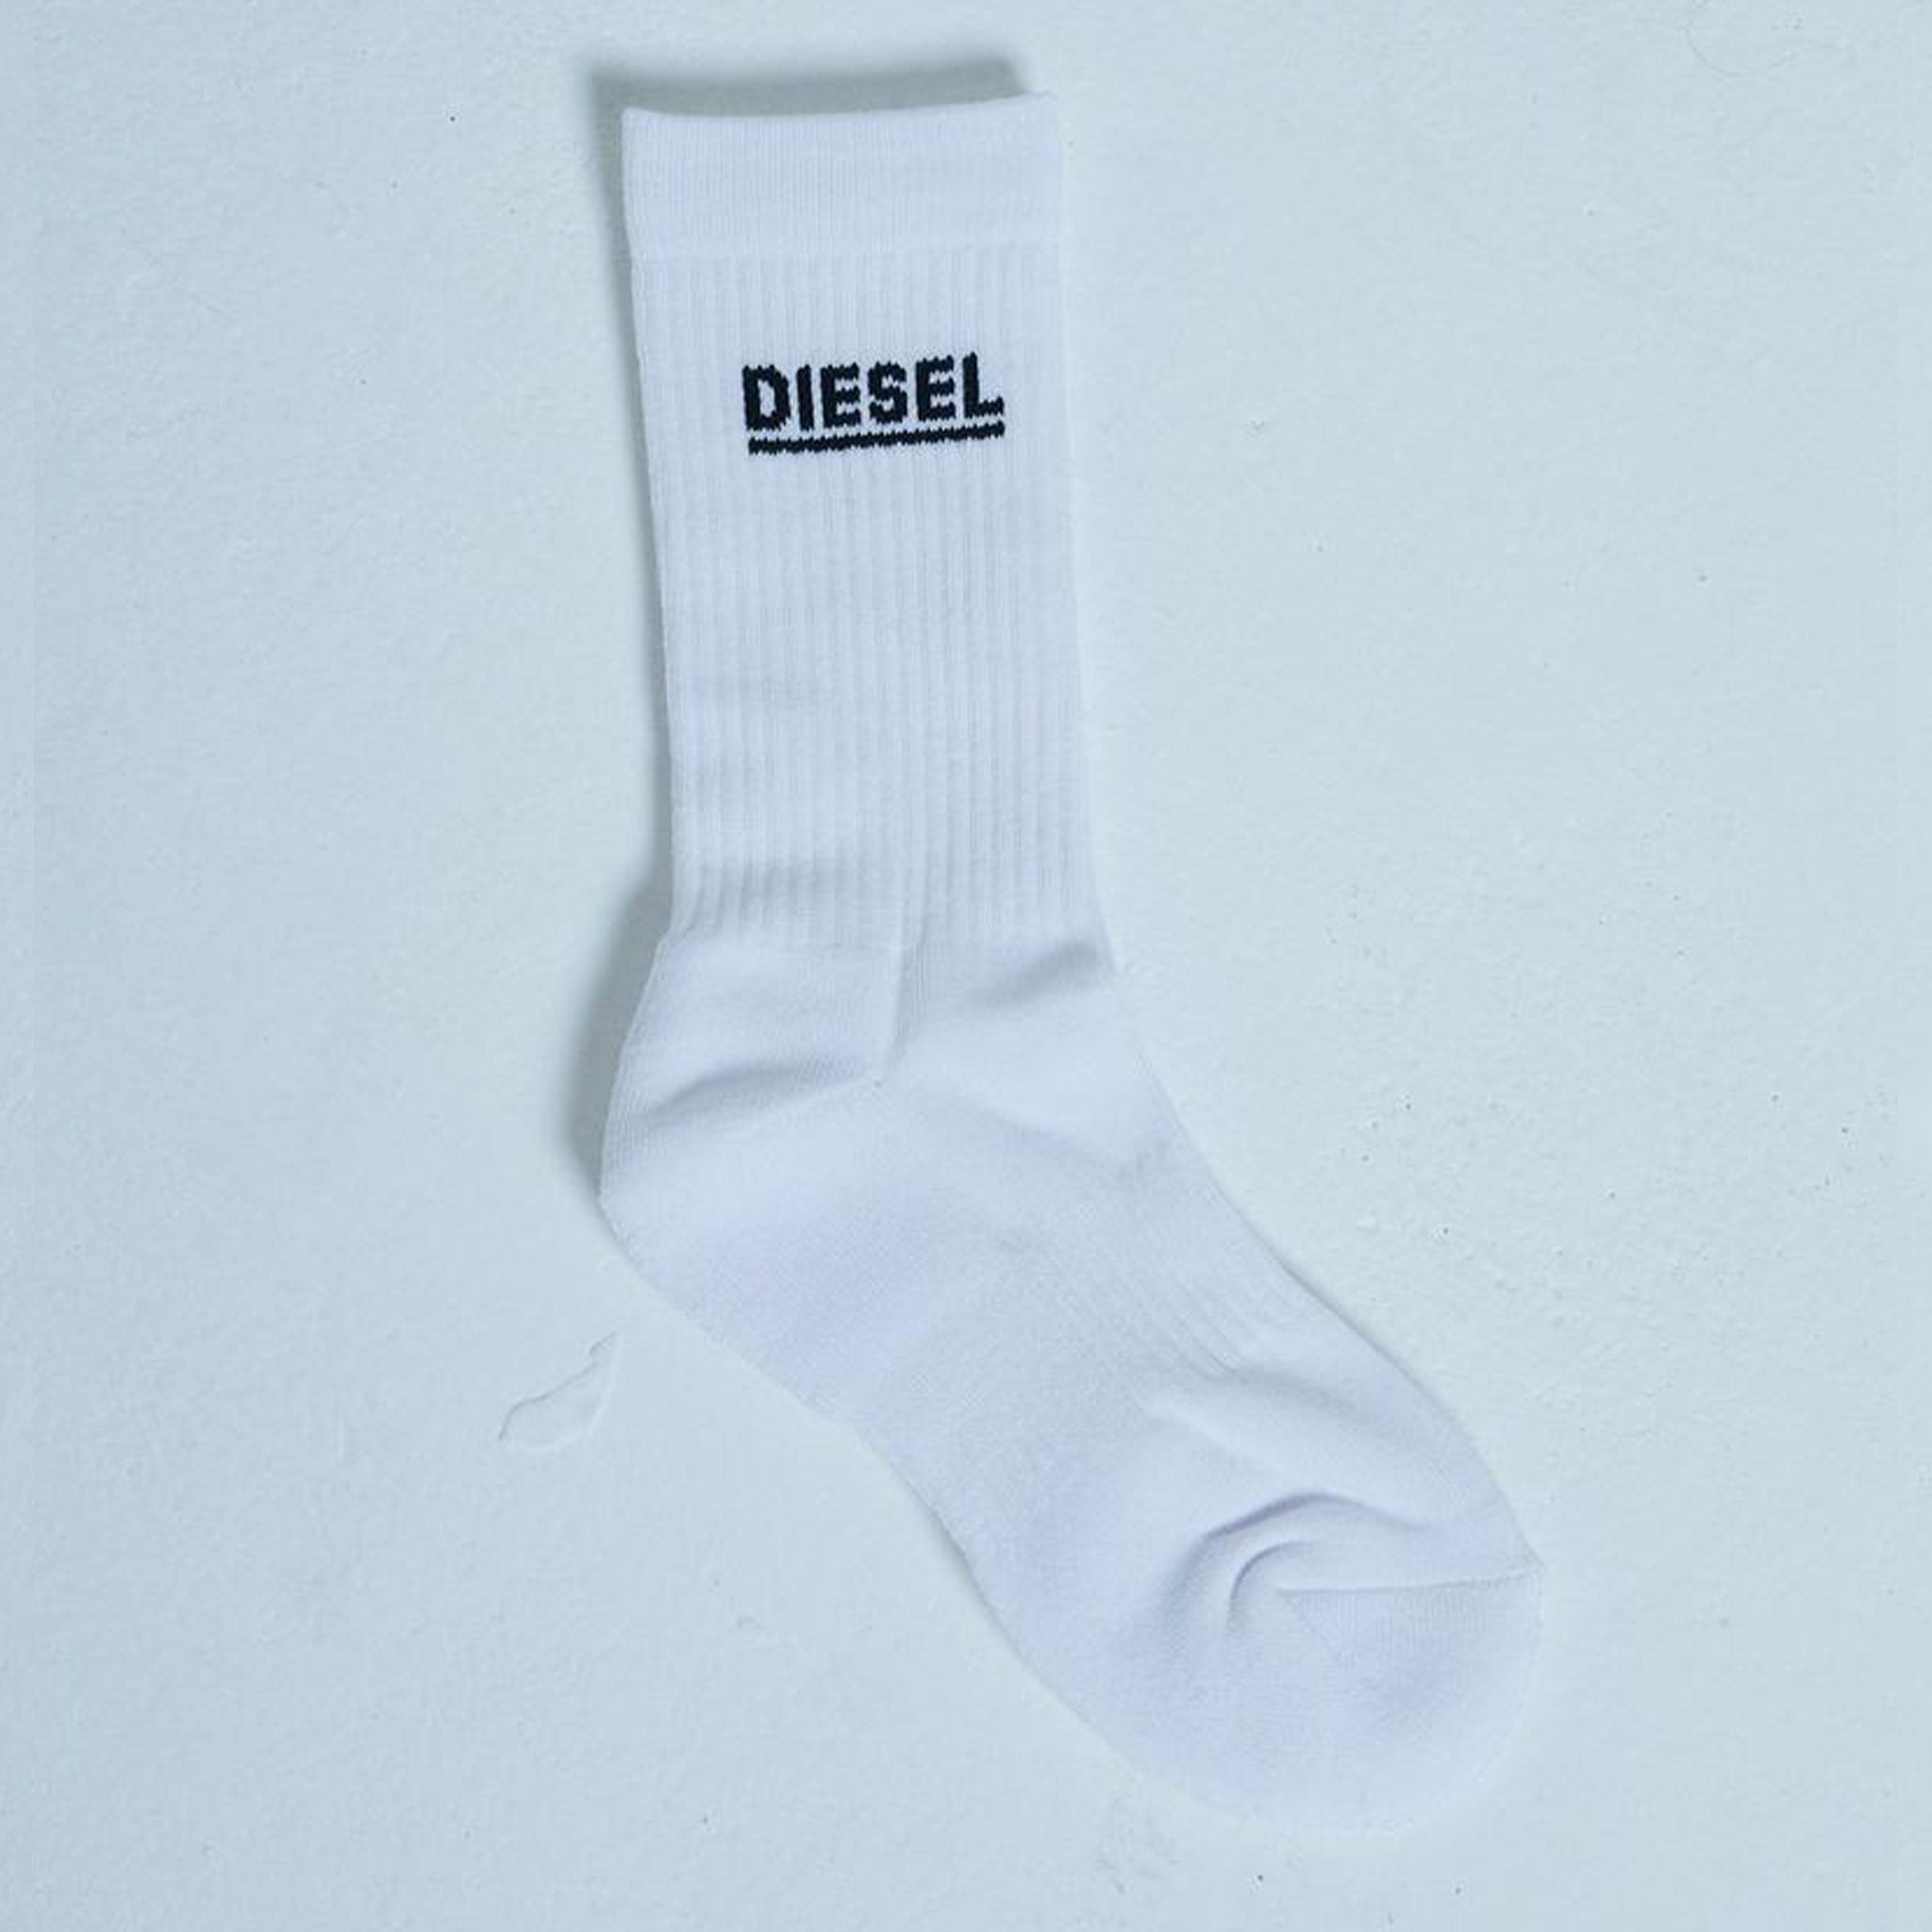 Diesel 3 Pack Socks - White